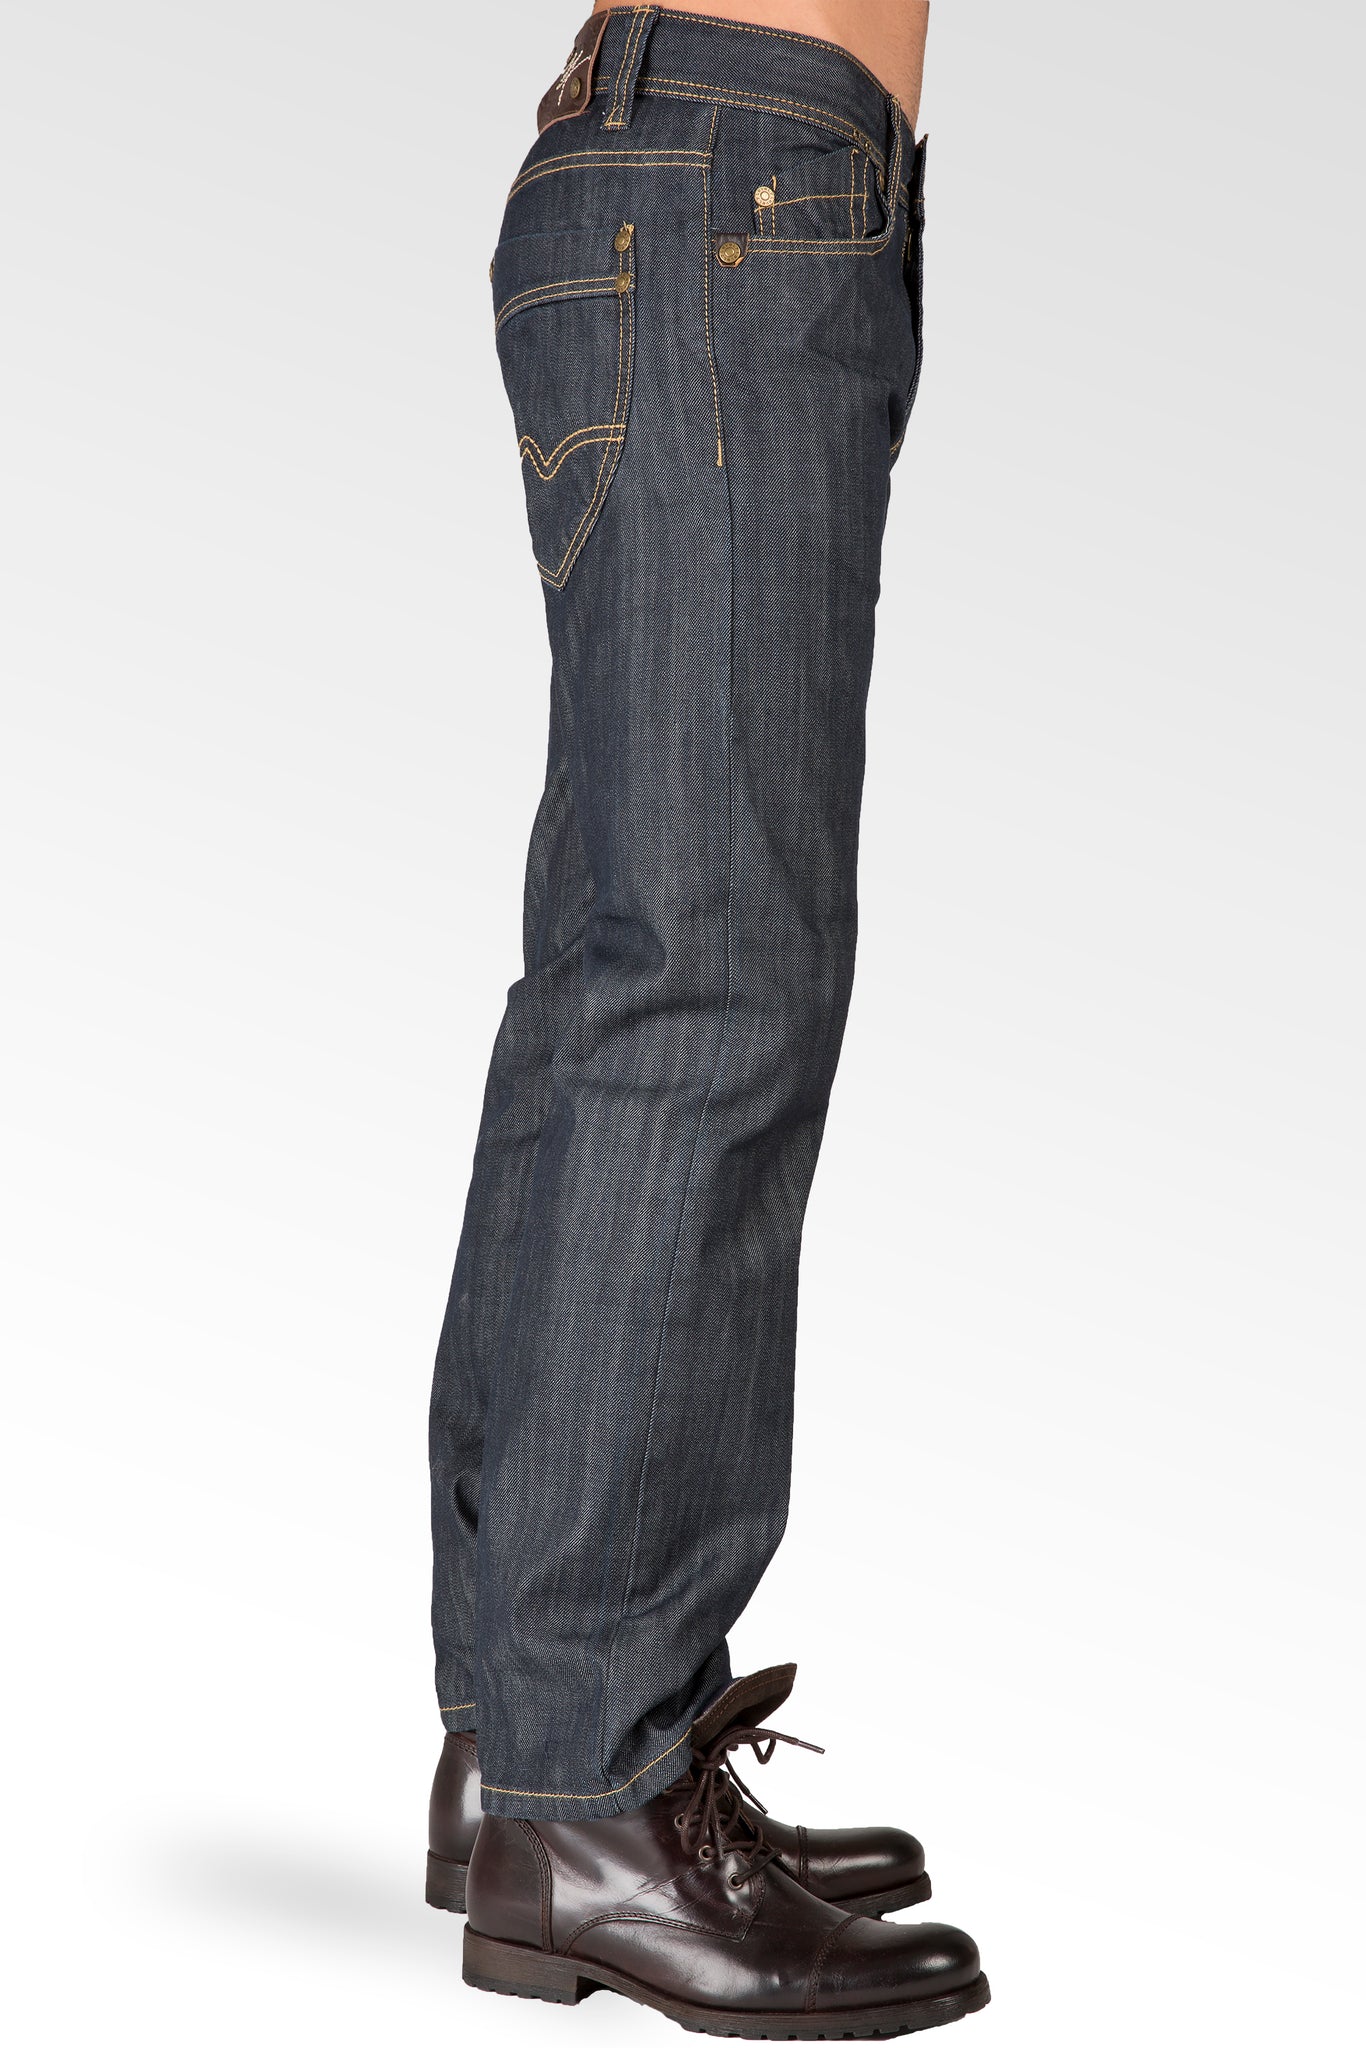 Relaxed Straight Coating Raw Indigo Premium Denim signature 5 Pocket Jeans